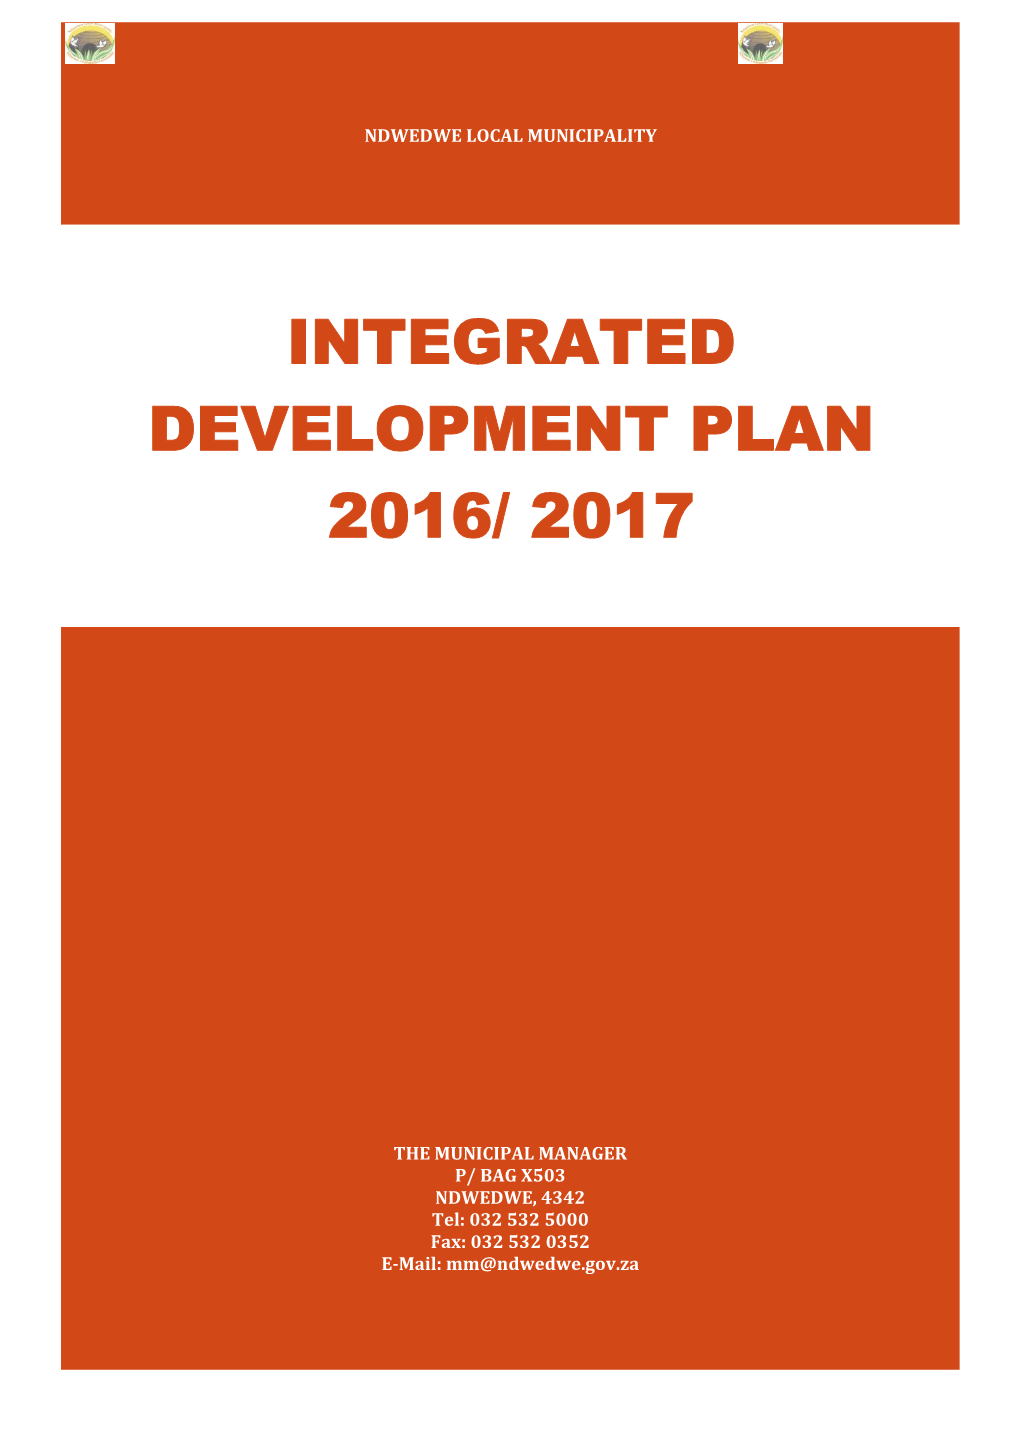 Integrated Development Plan 2016/ 2017